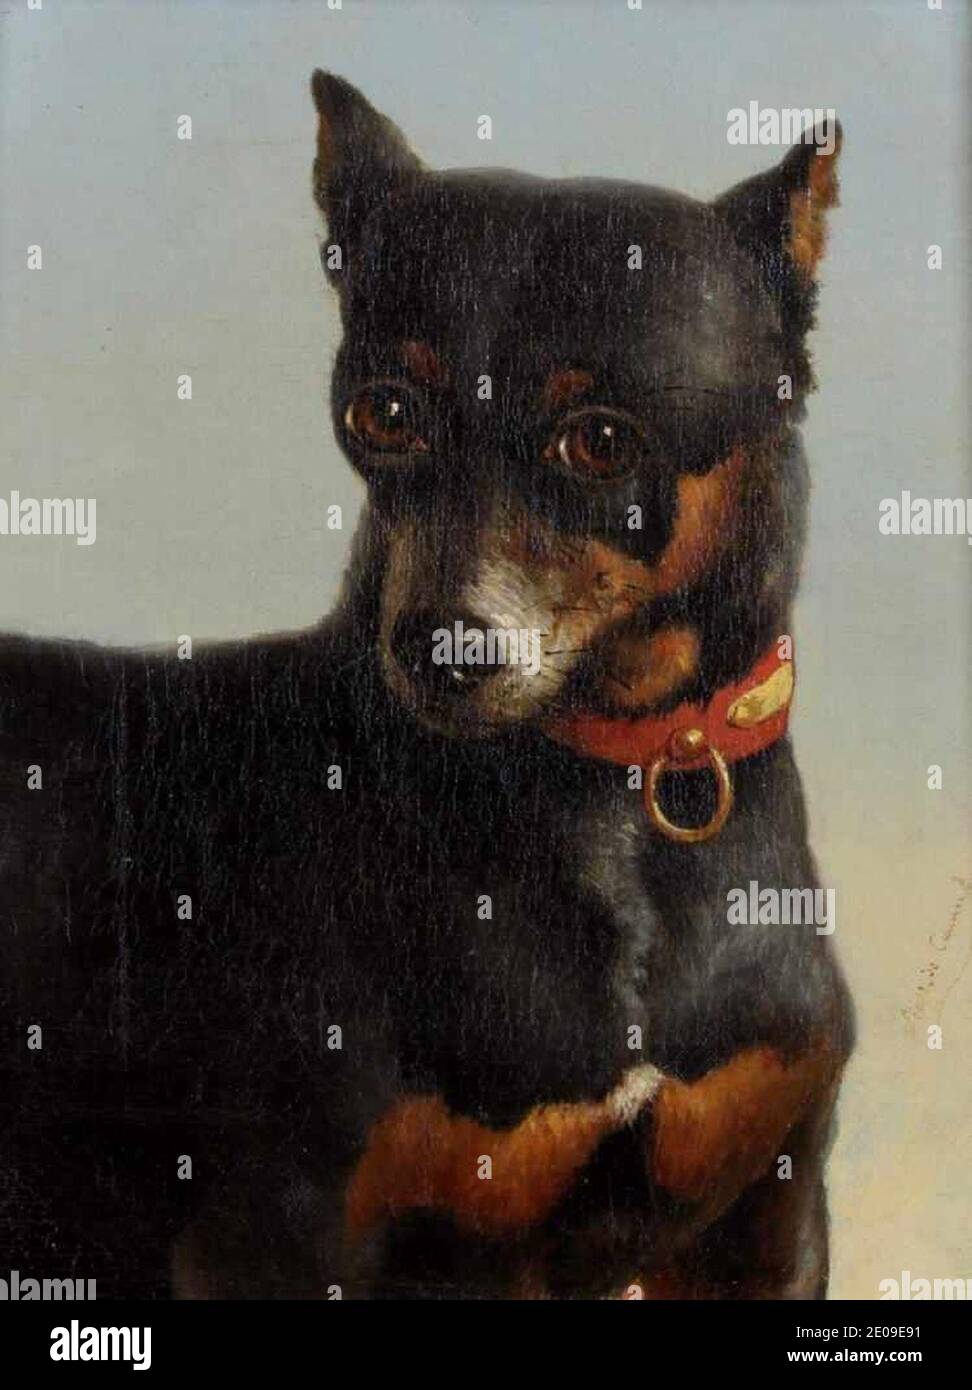 Leopold De Cauwer - Hundeporträt eines Pinschers. Stock Photo